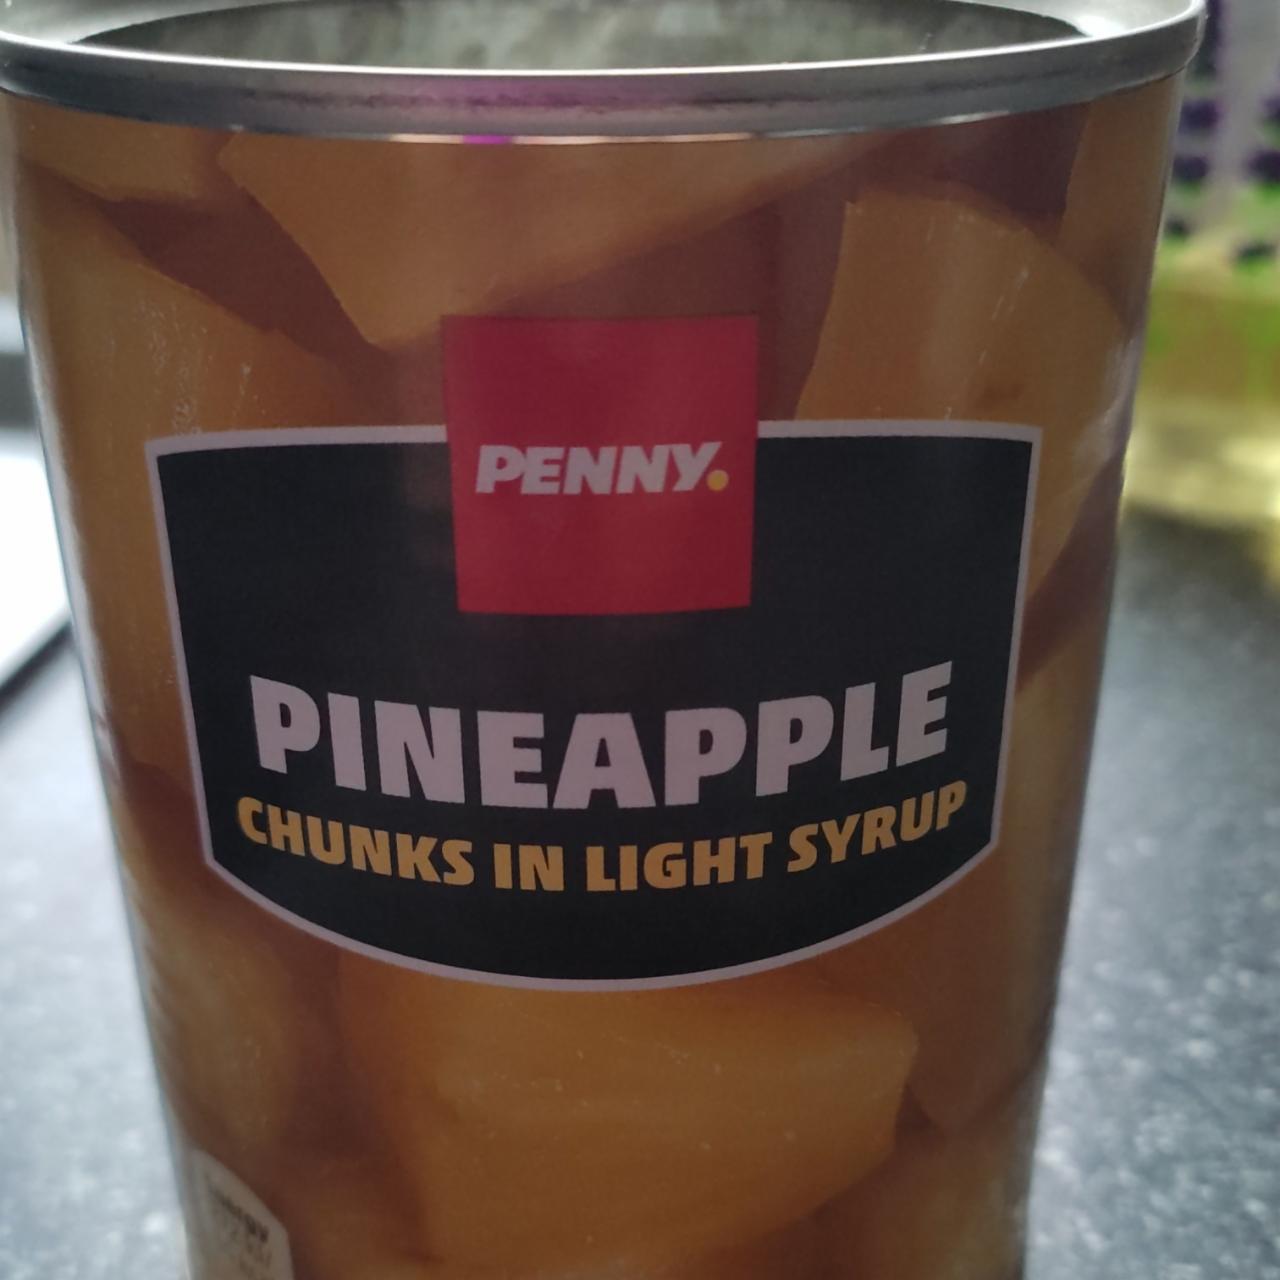 Képek - Pineapple chunks in light syrup Penny